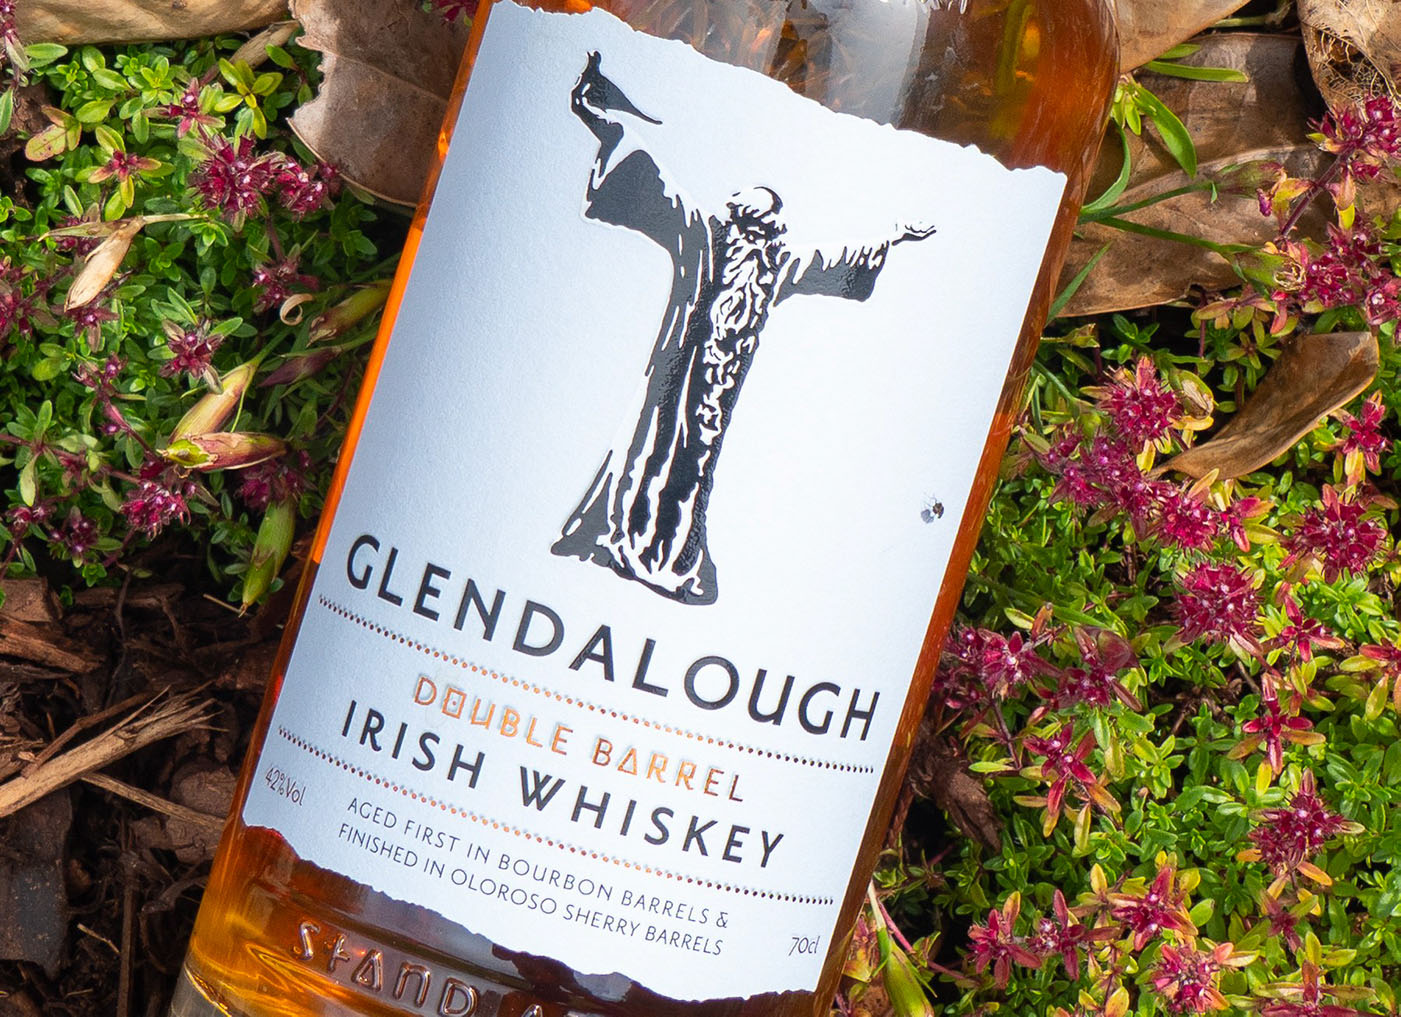 Glendalough Double Barrel single grain whiskey